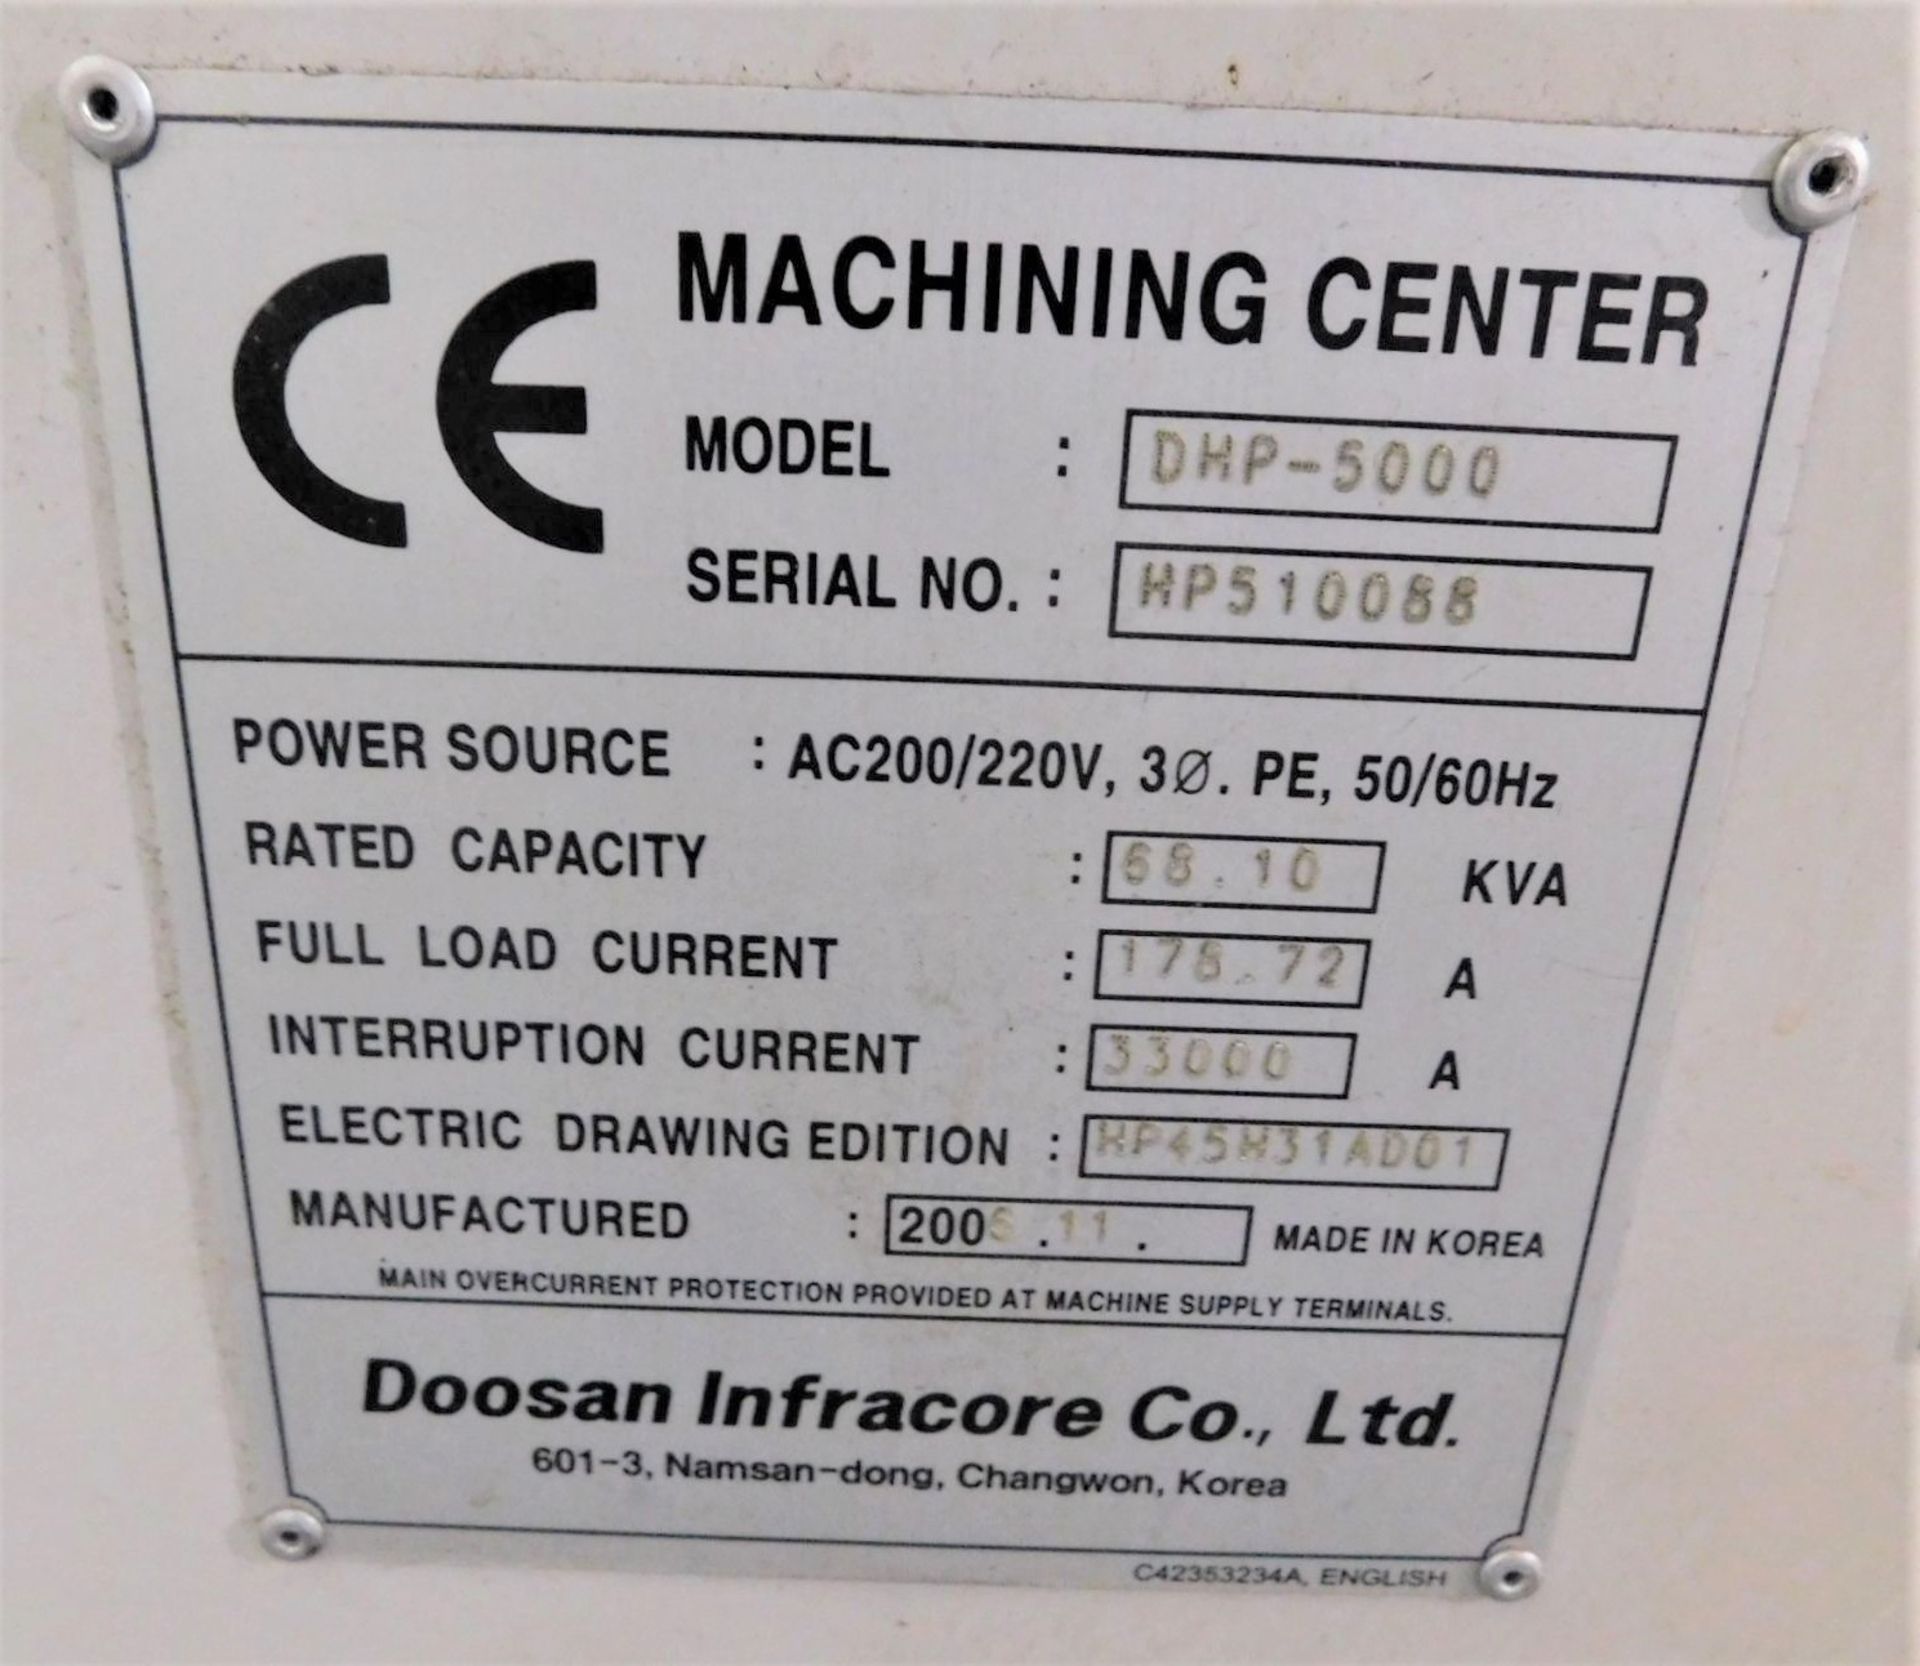 20"x20" Doosan DHP-5000 CNC 4-Axis Horizontal Machining Center, S/N HP510088, New 2007 - Image 10 of 20